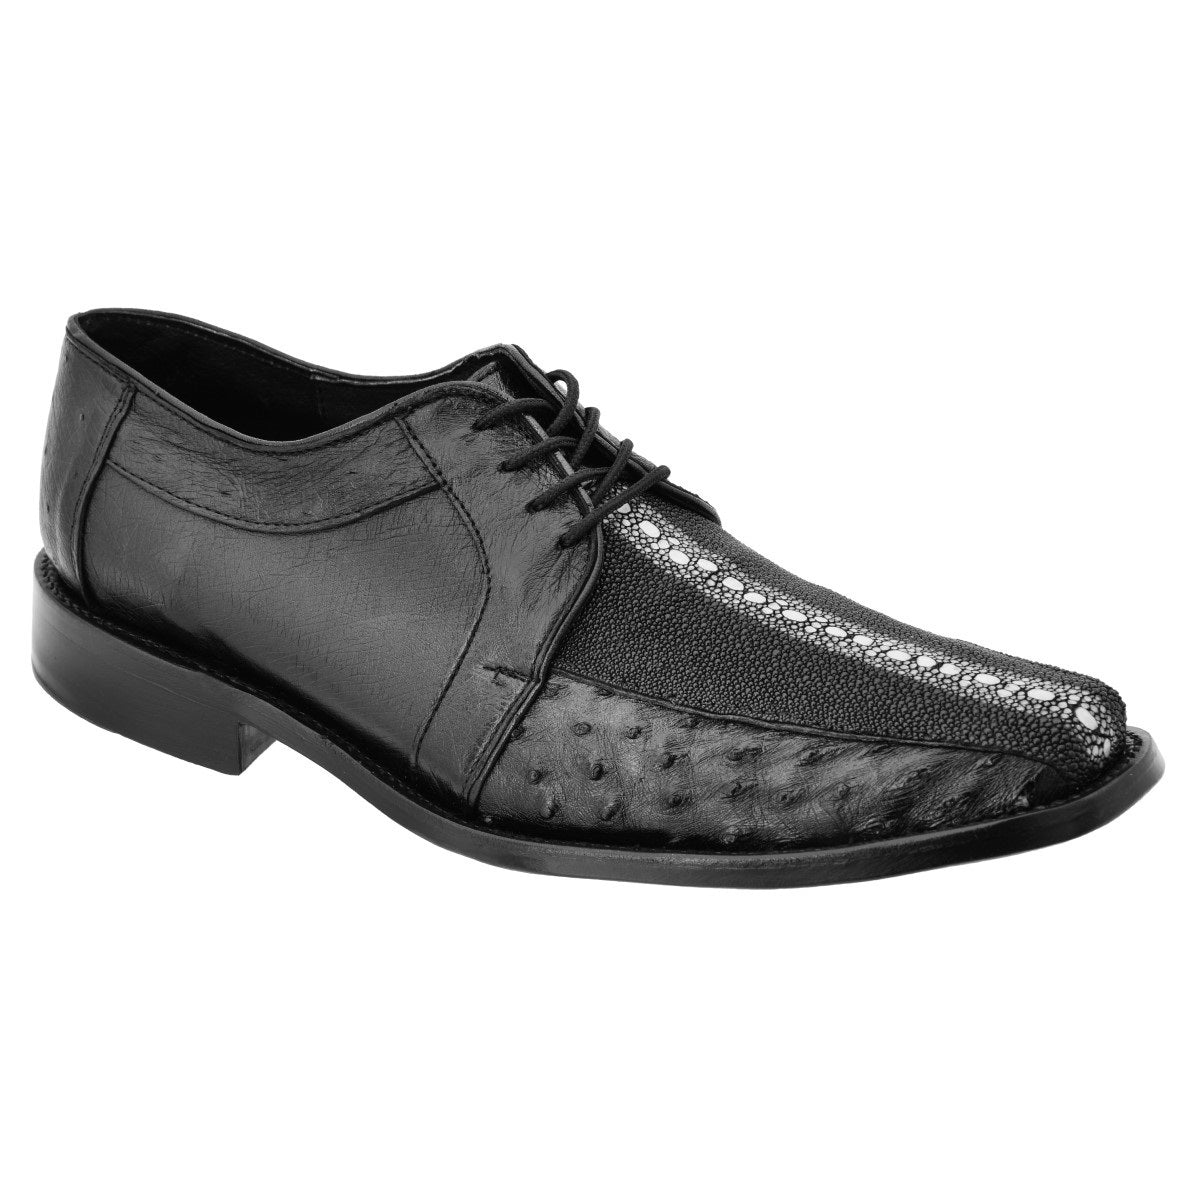 Zapatos Exoticos para Hombre TM-WD0454 - Exotic Shoes for Men